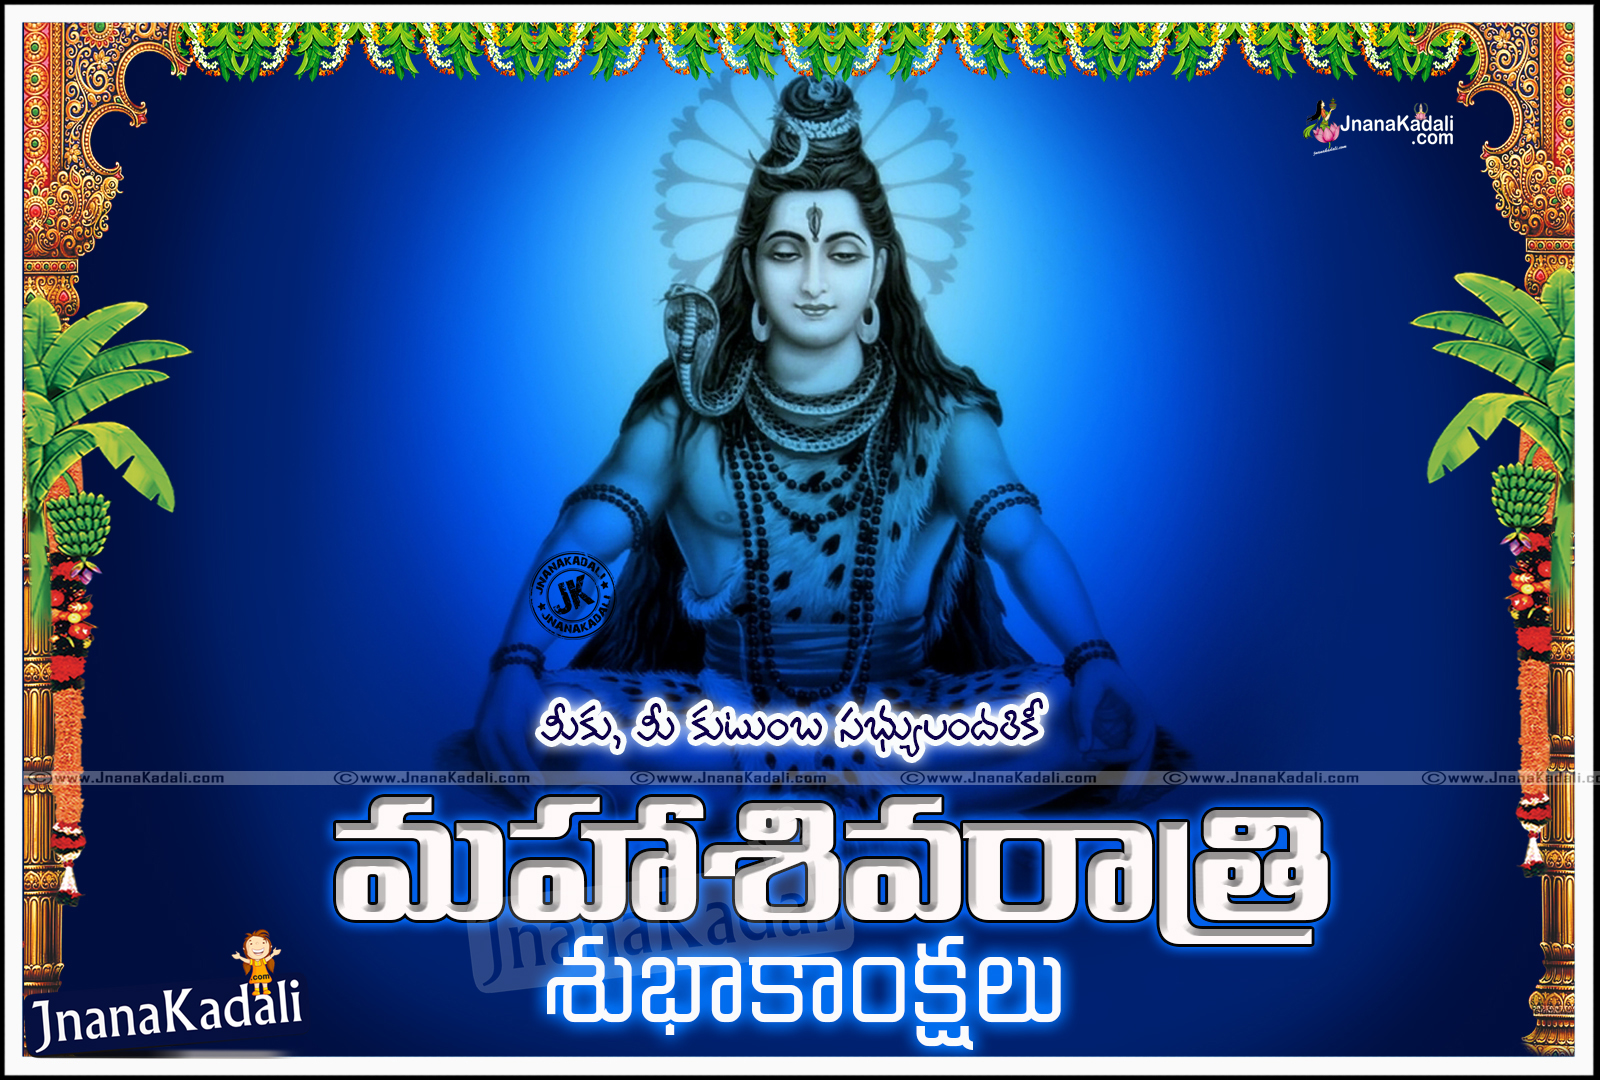 Telugu Shivaratri Best Greeting Cards wallpapers | JNANA KADALI ...